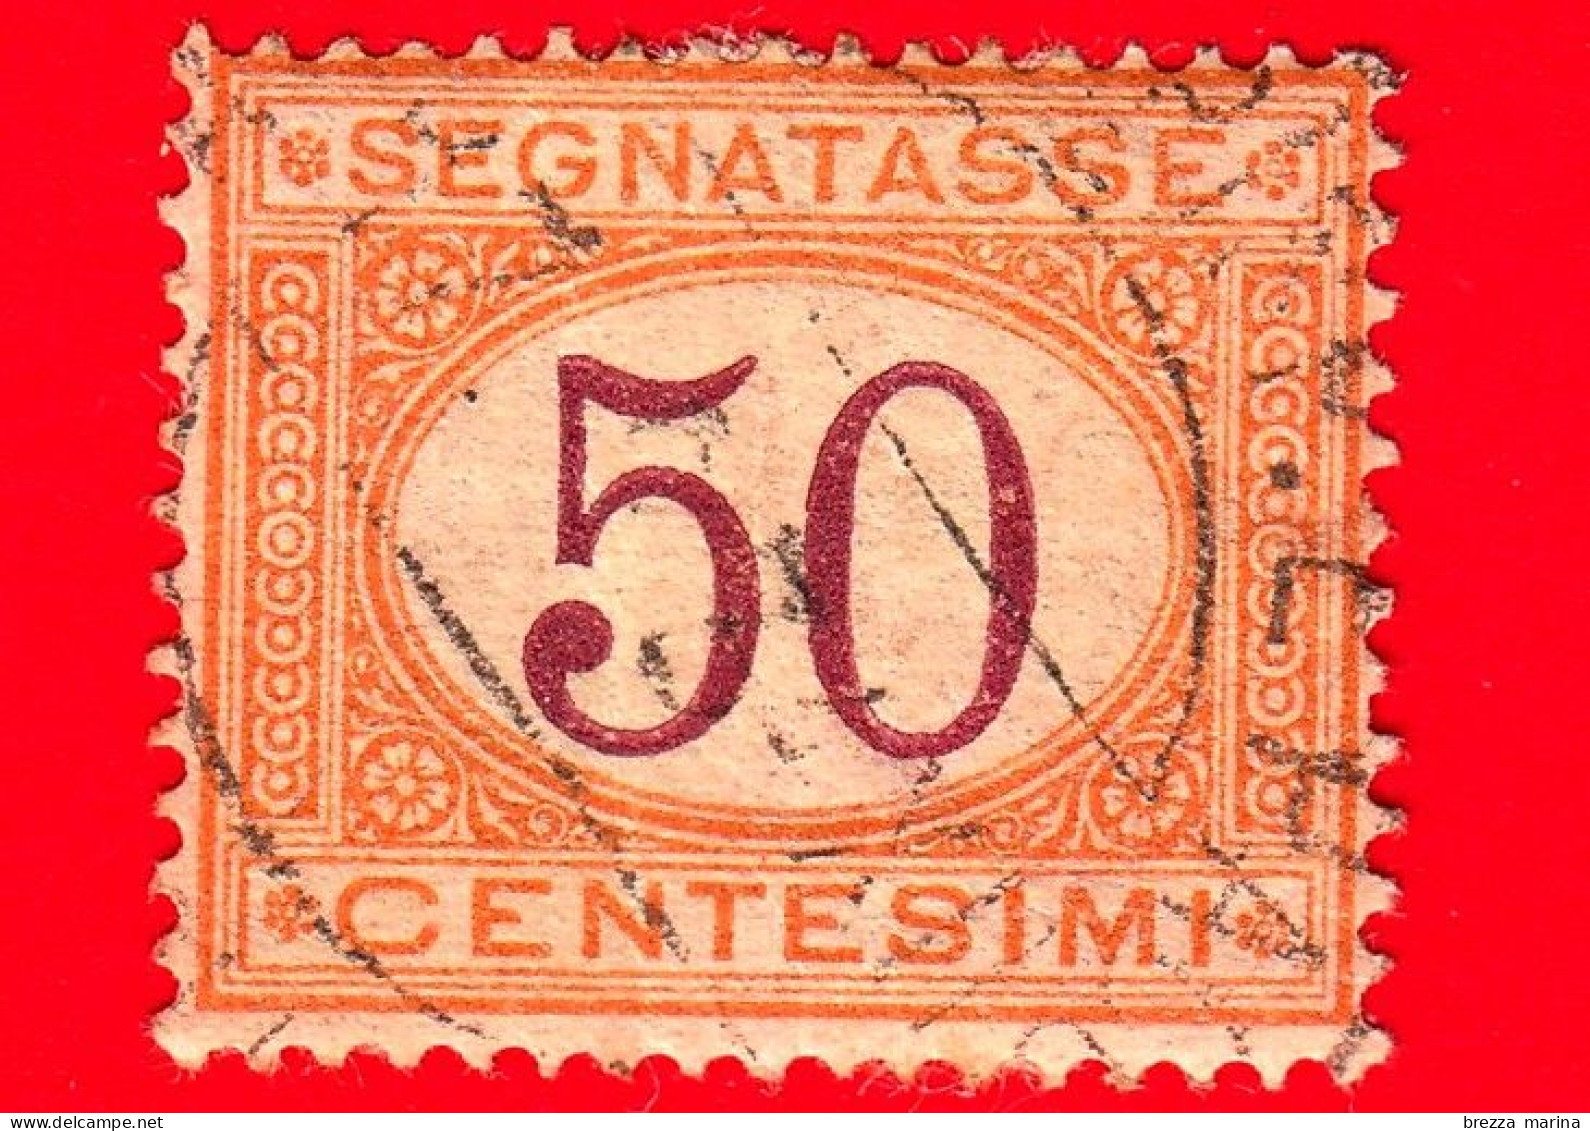 ITALIA - Usato -  1870 - 1890 - Segnatasse - Cifra Entro Un Ovale - 50 C. - Taxe